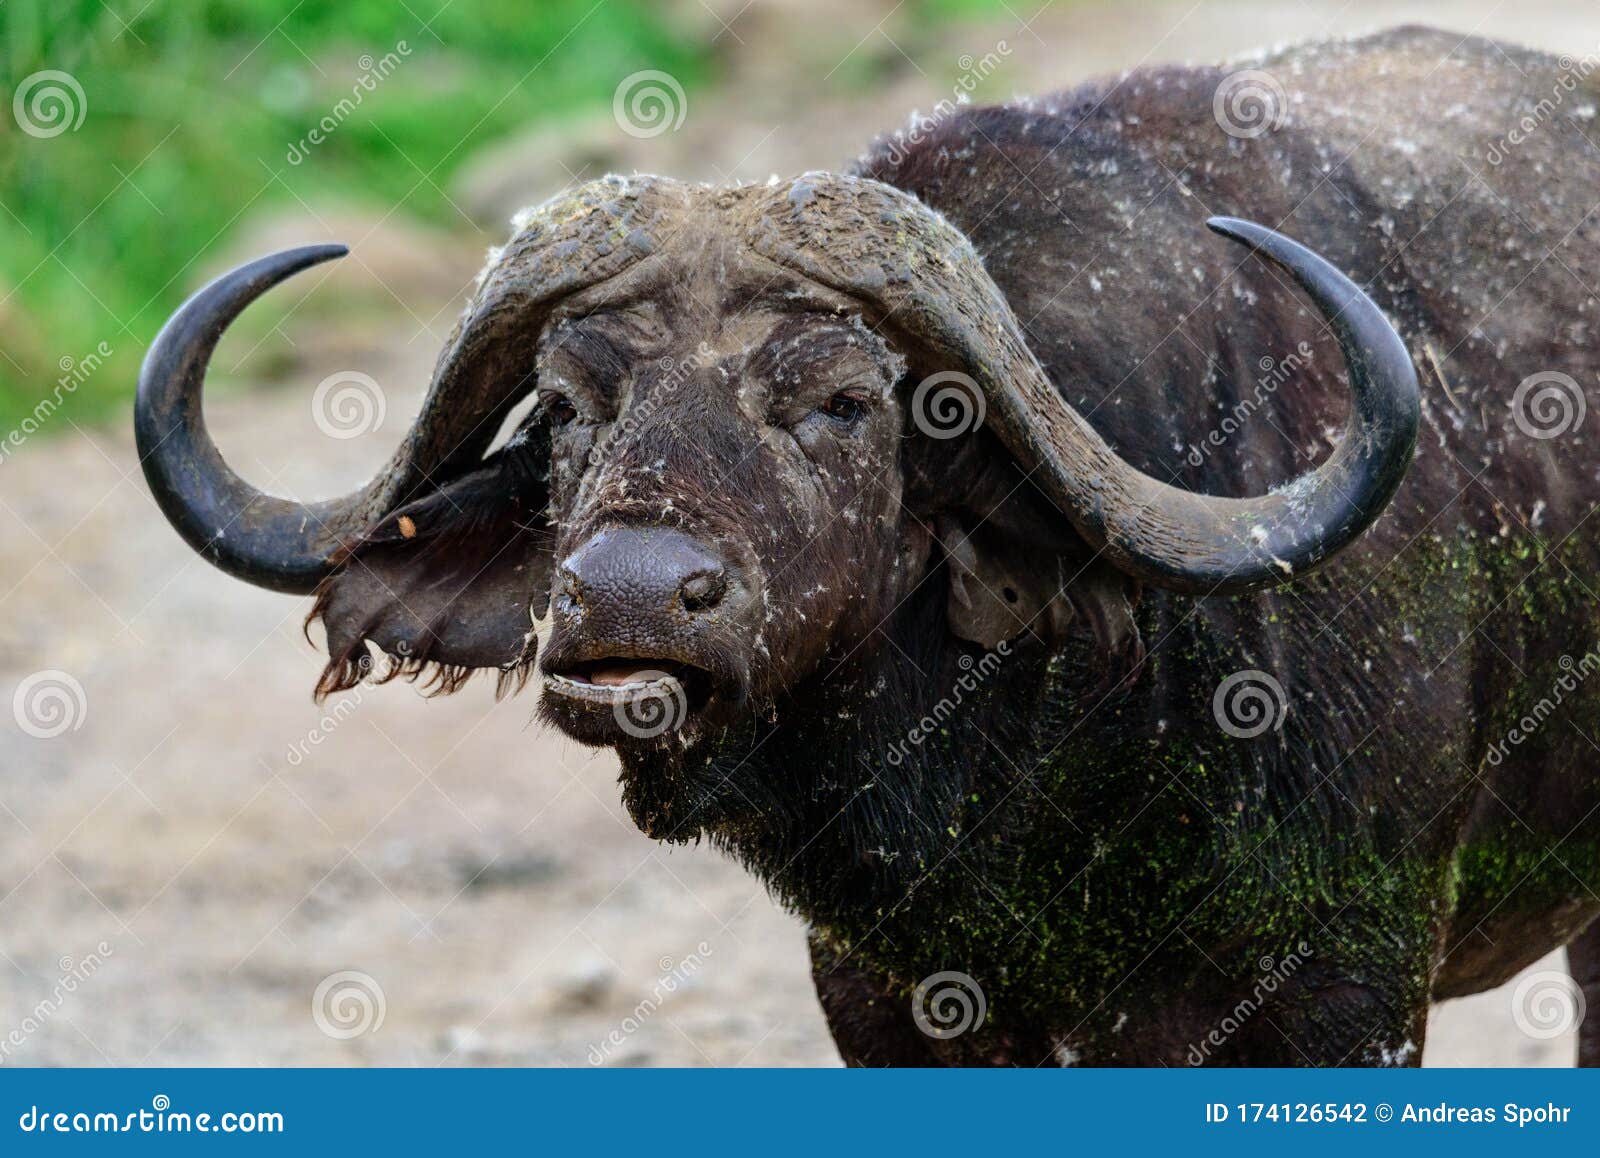 of an African Buffalo or Cape Buffalo Photo - Image of tanzania, wildlife: 174126542